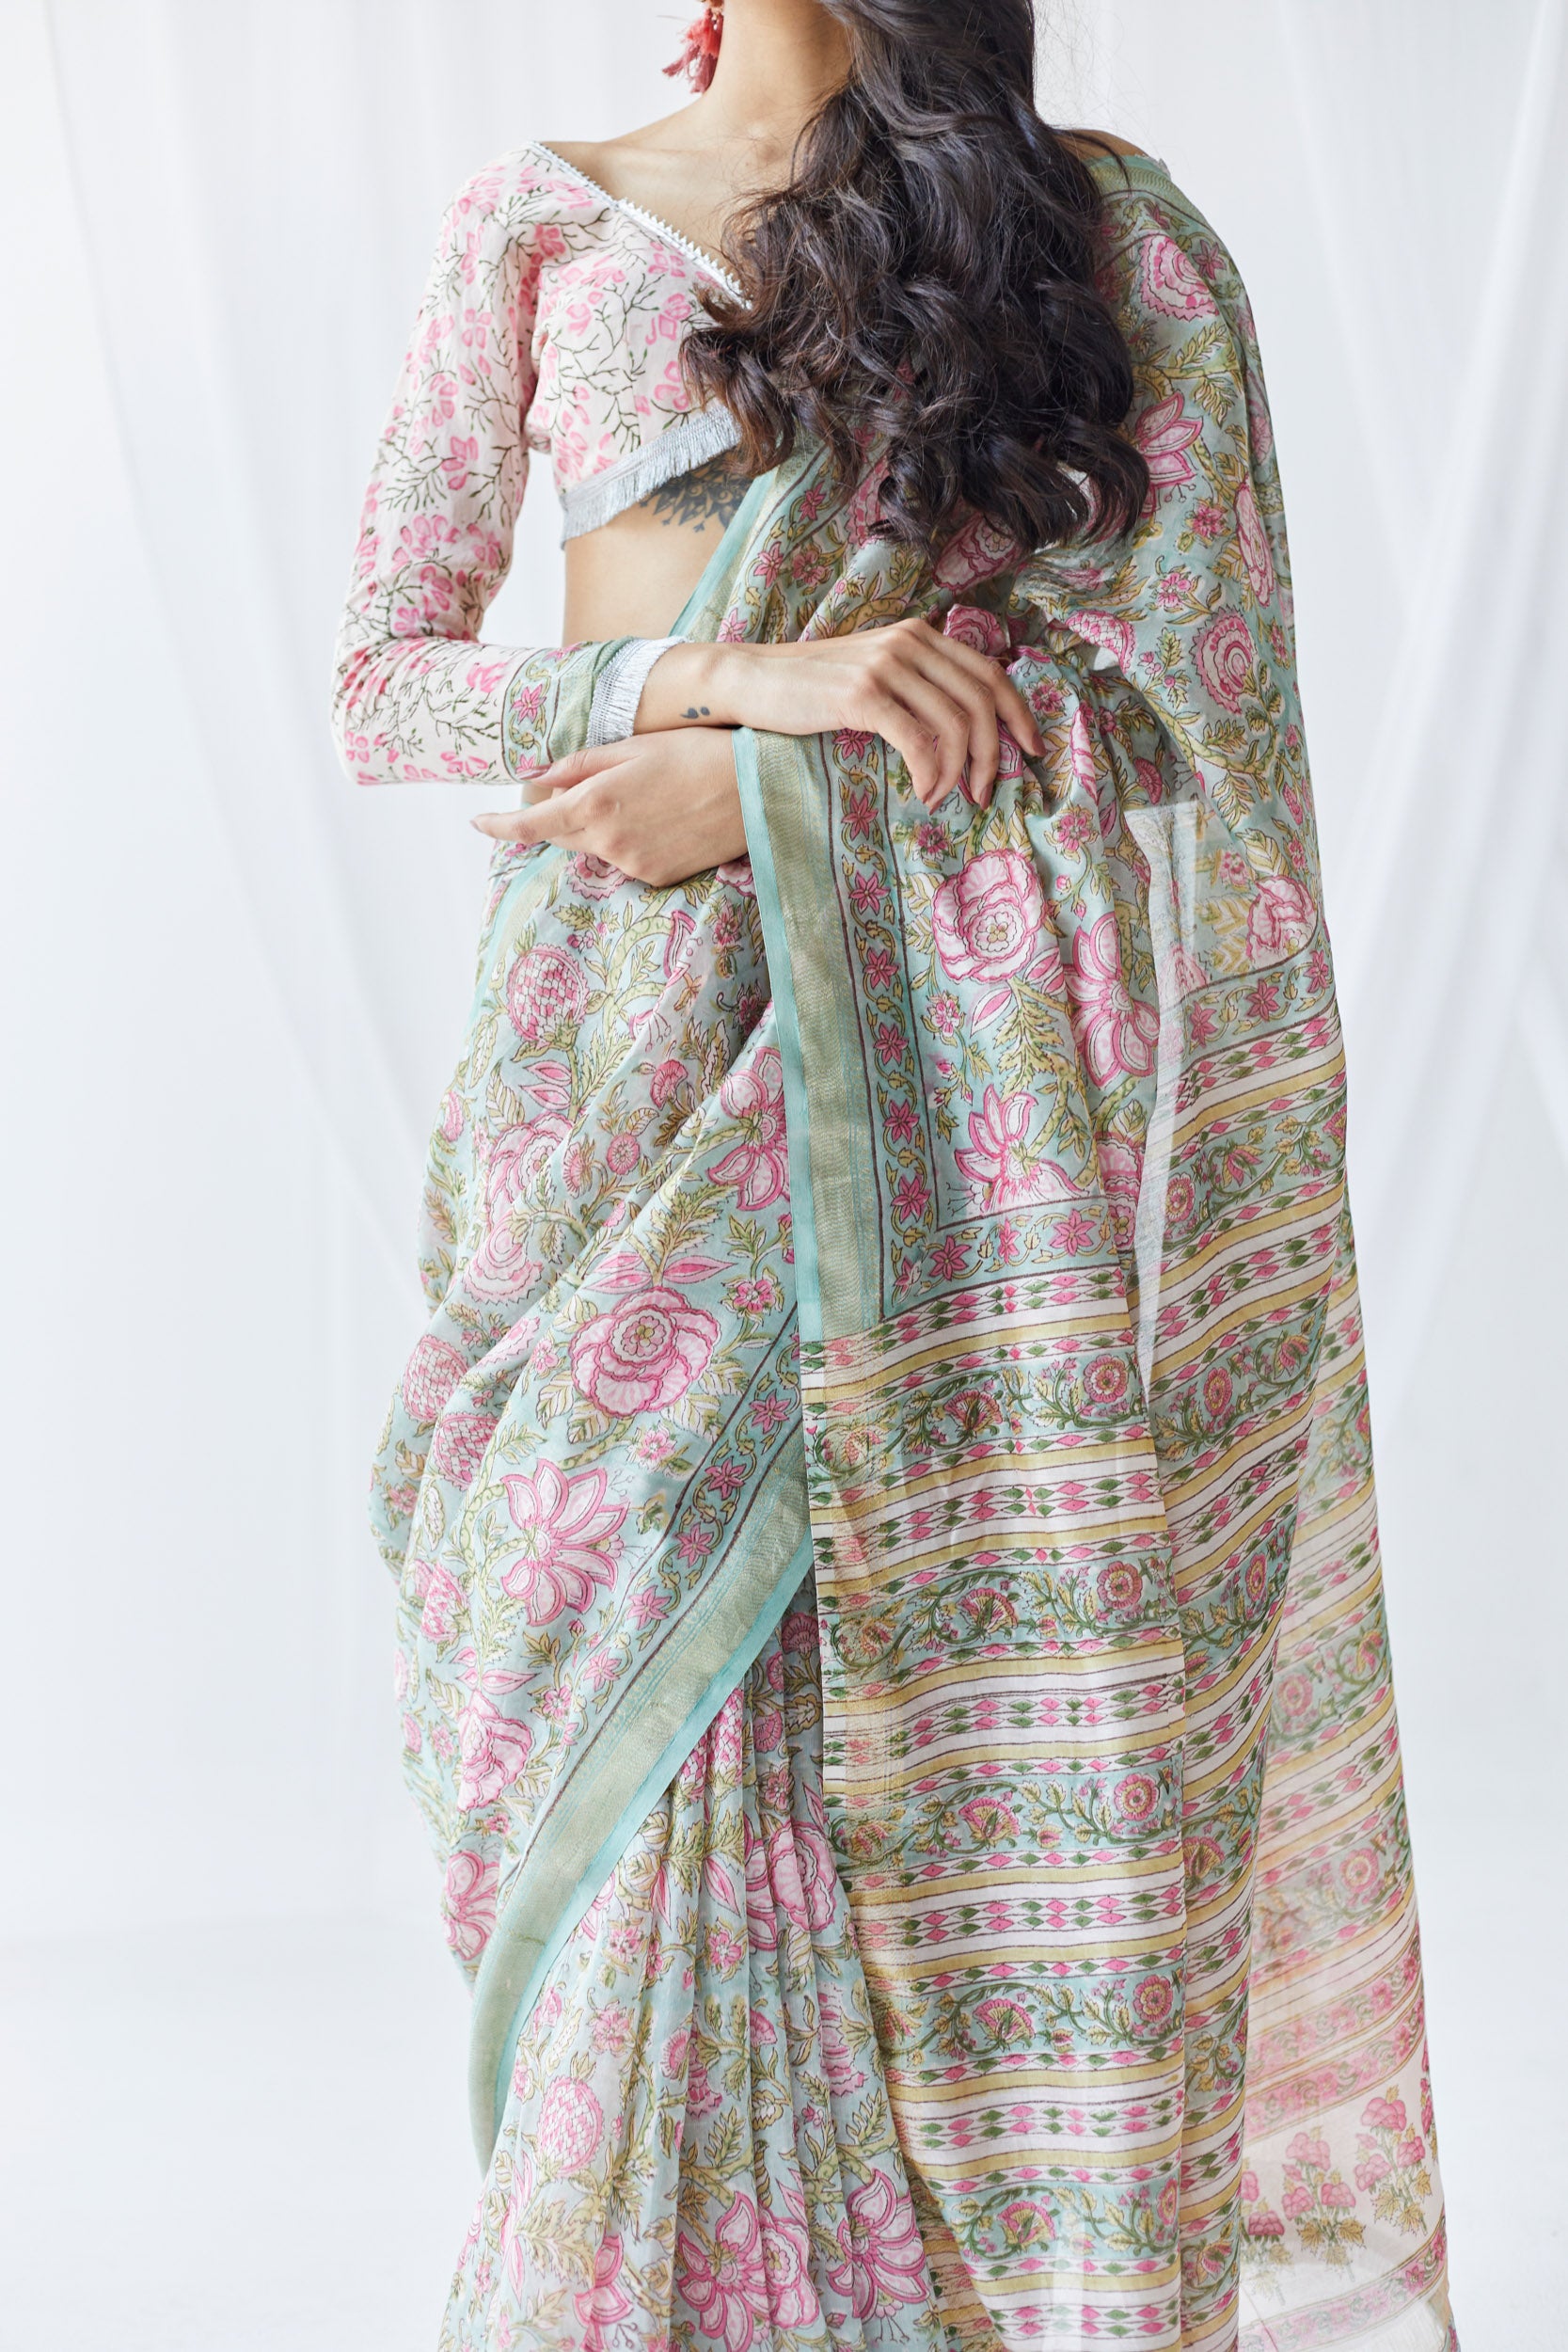 Roza Green & Pink Printed Chanderi Silk Saree